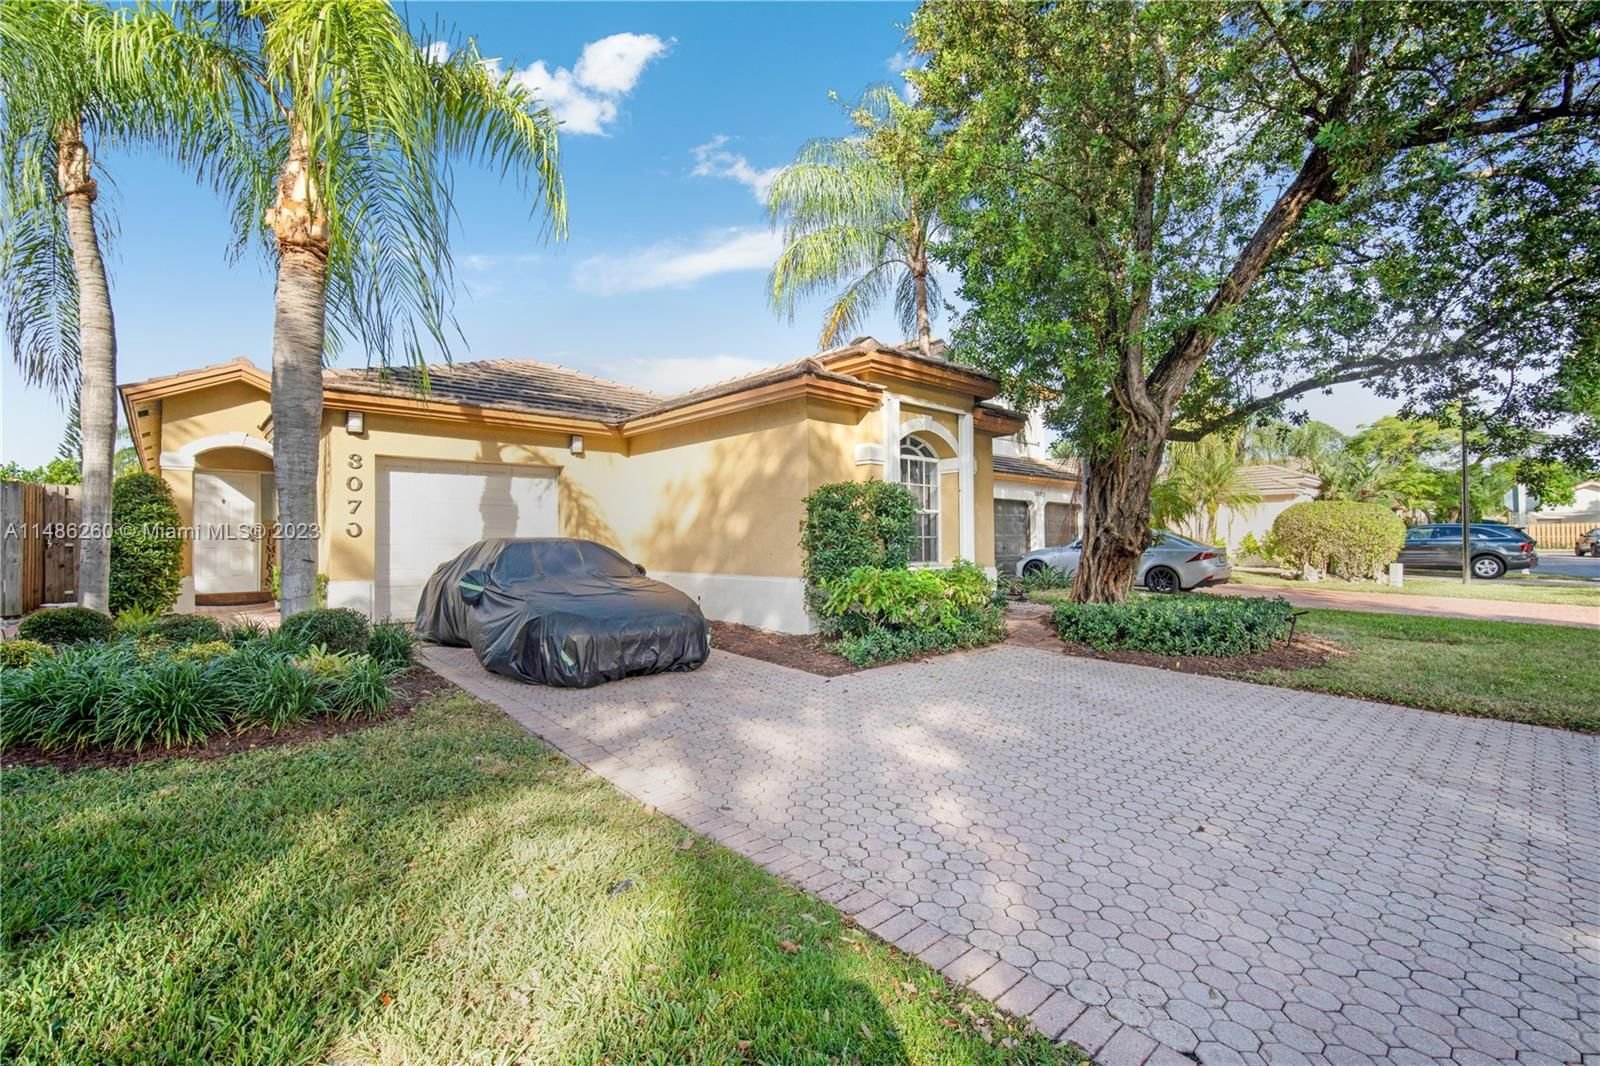 Real estate property located at 3070 99th Ct, Miami-Dade County, COSTA VERDE SEC 1, Doral, FL